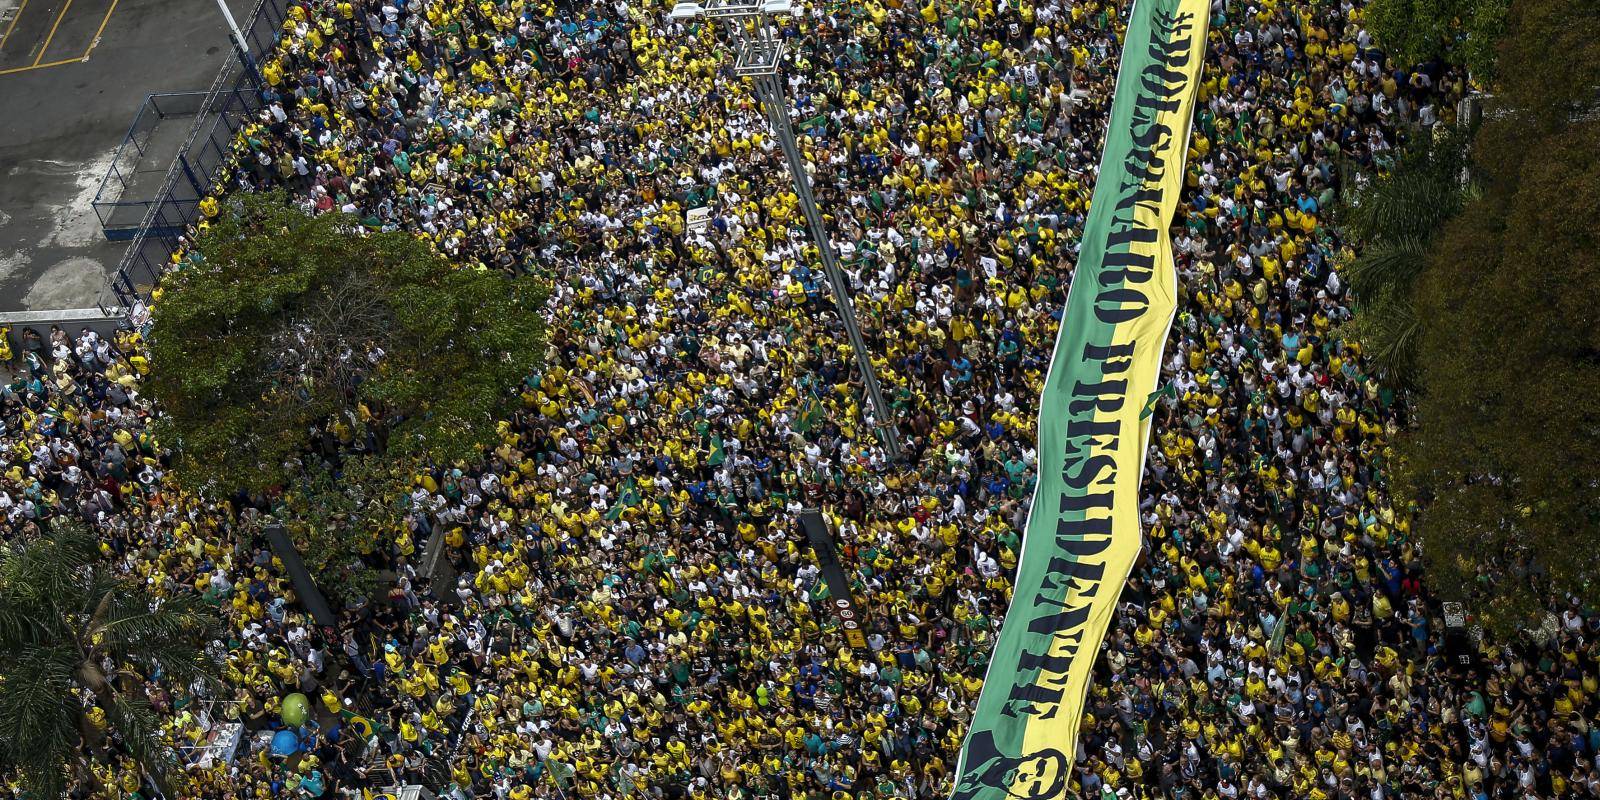 Brazilian Championship: democracy restored